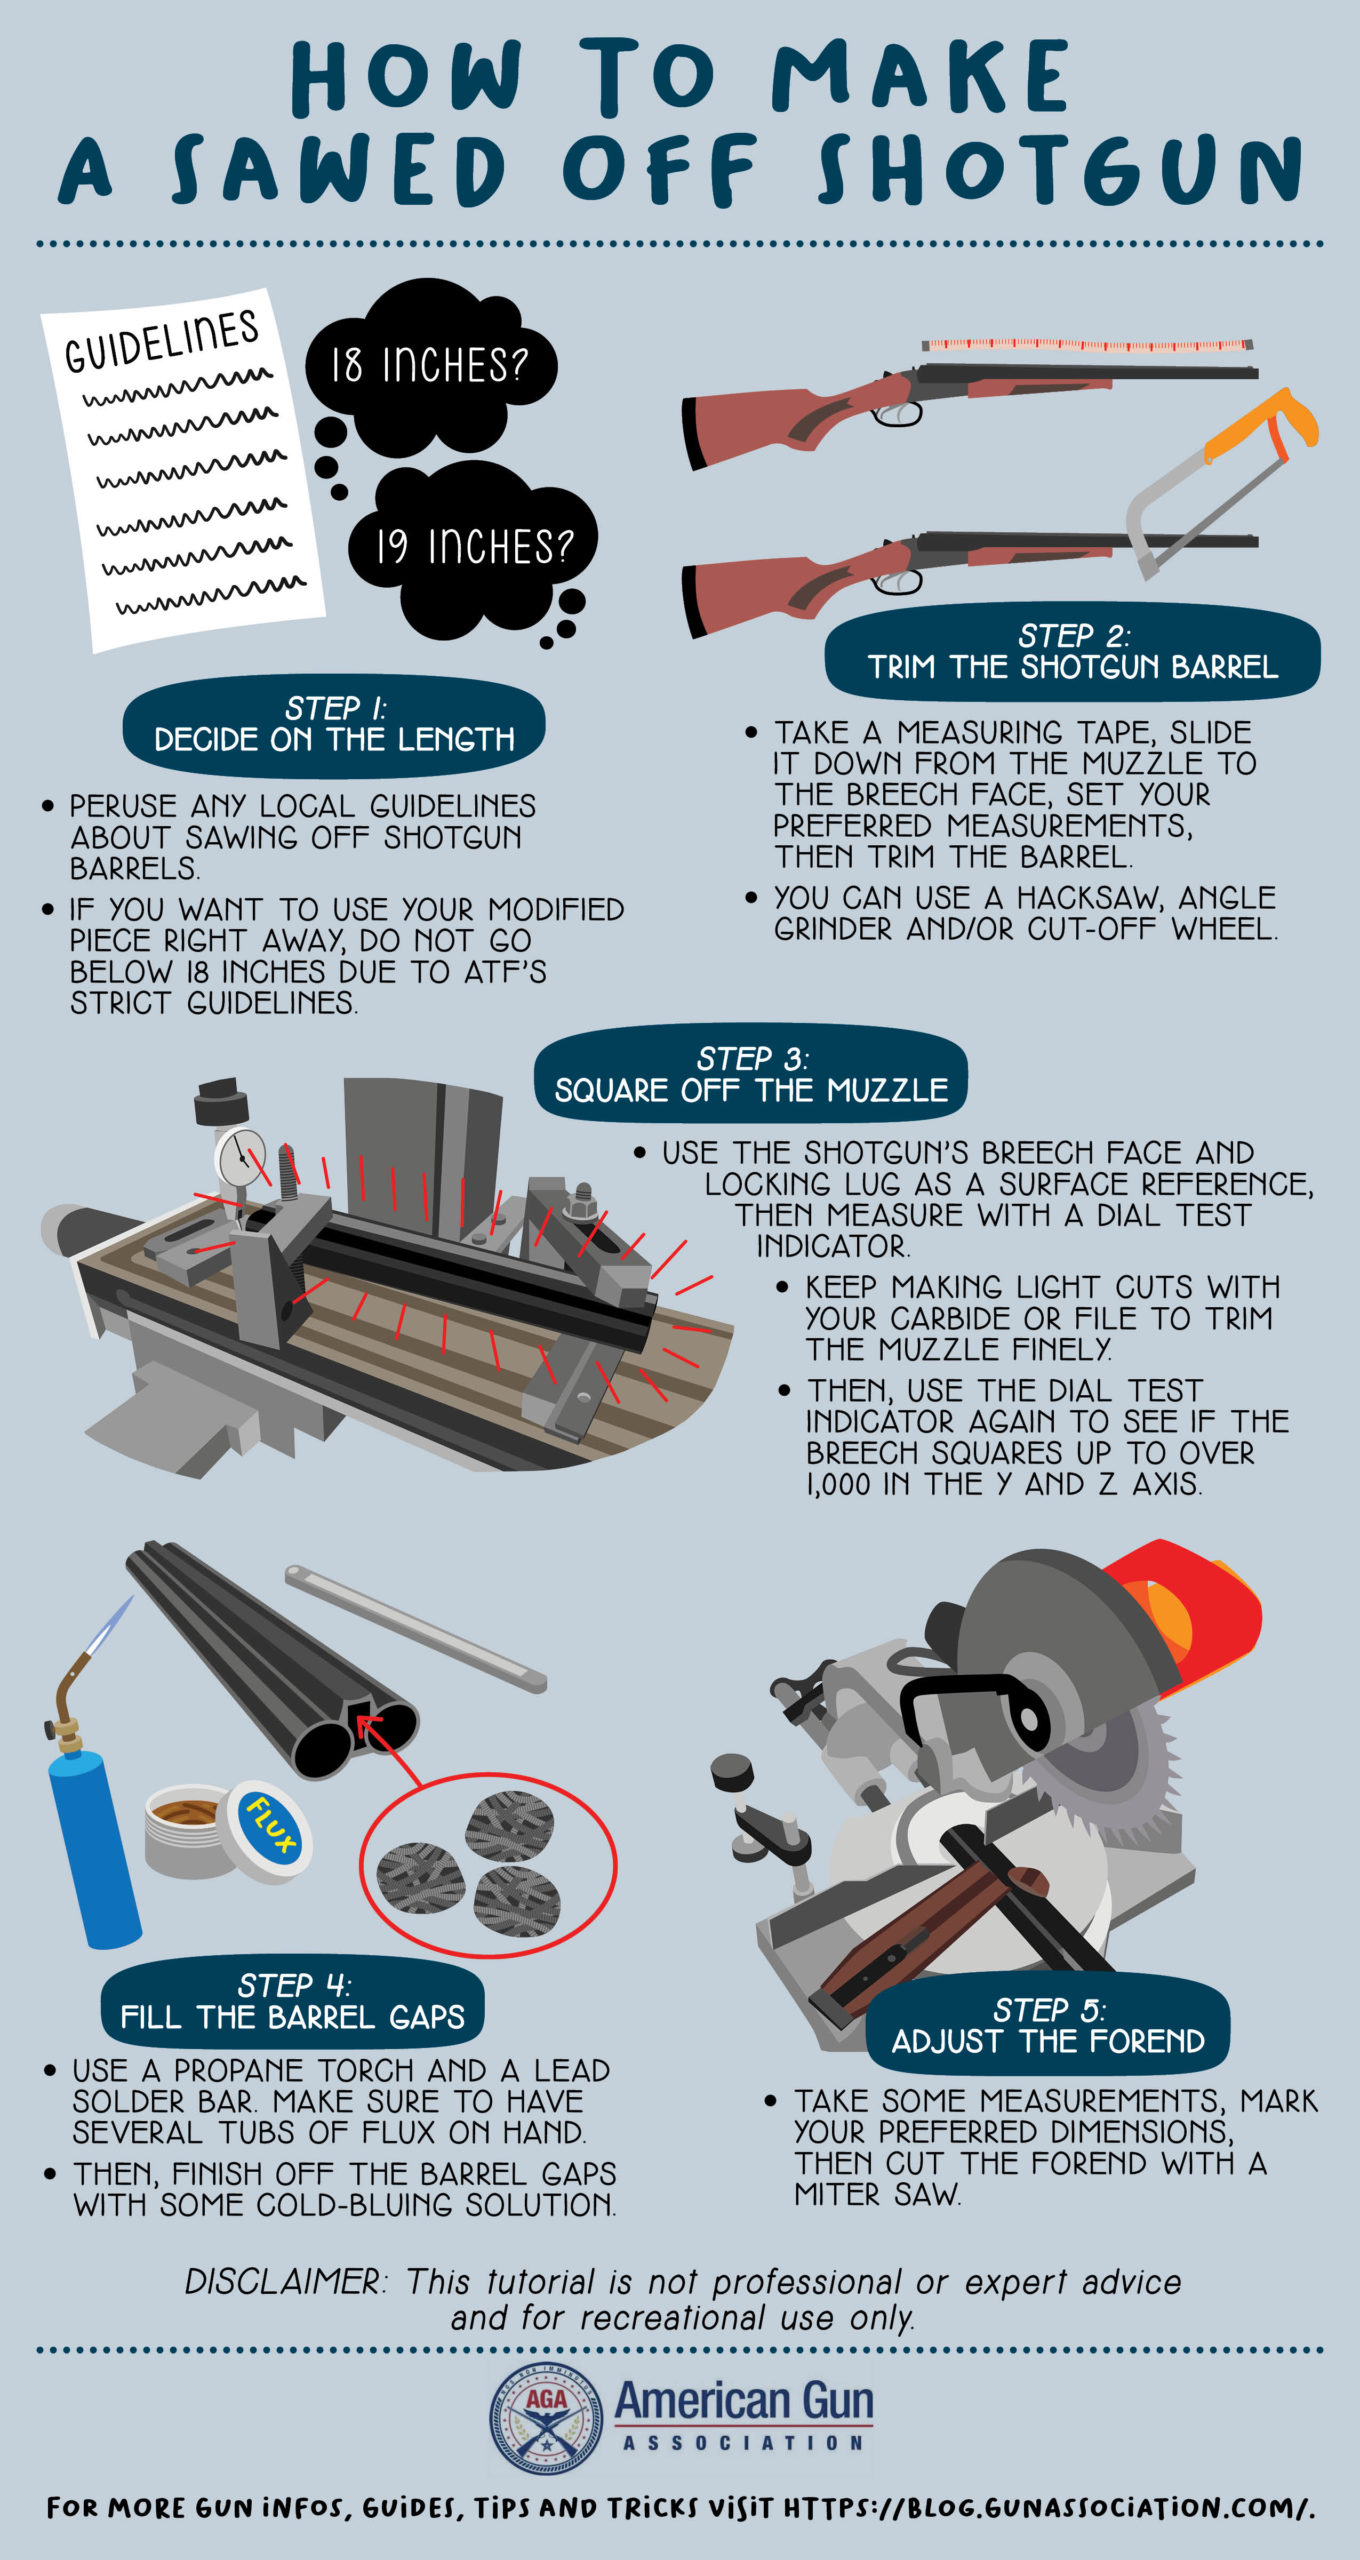 How to Make a Sawed Off ShotgunHow to Make a Sawed Off Shotgun | instructographic